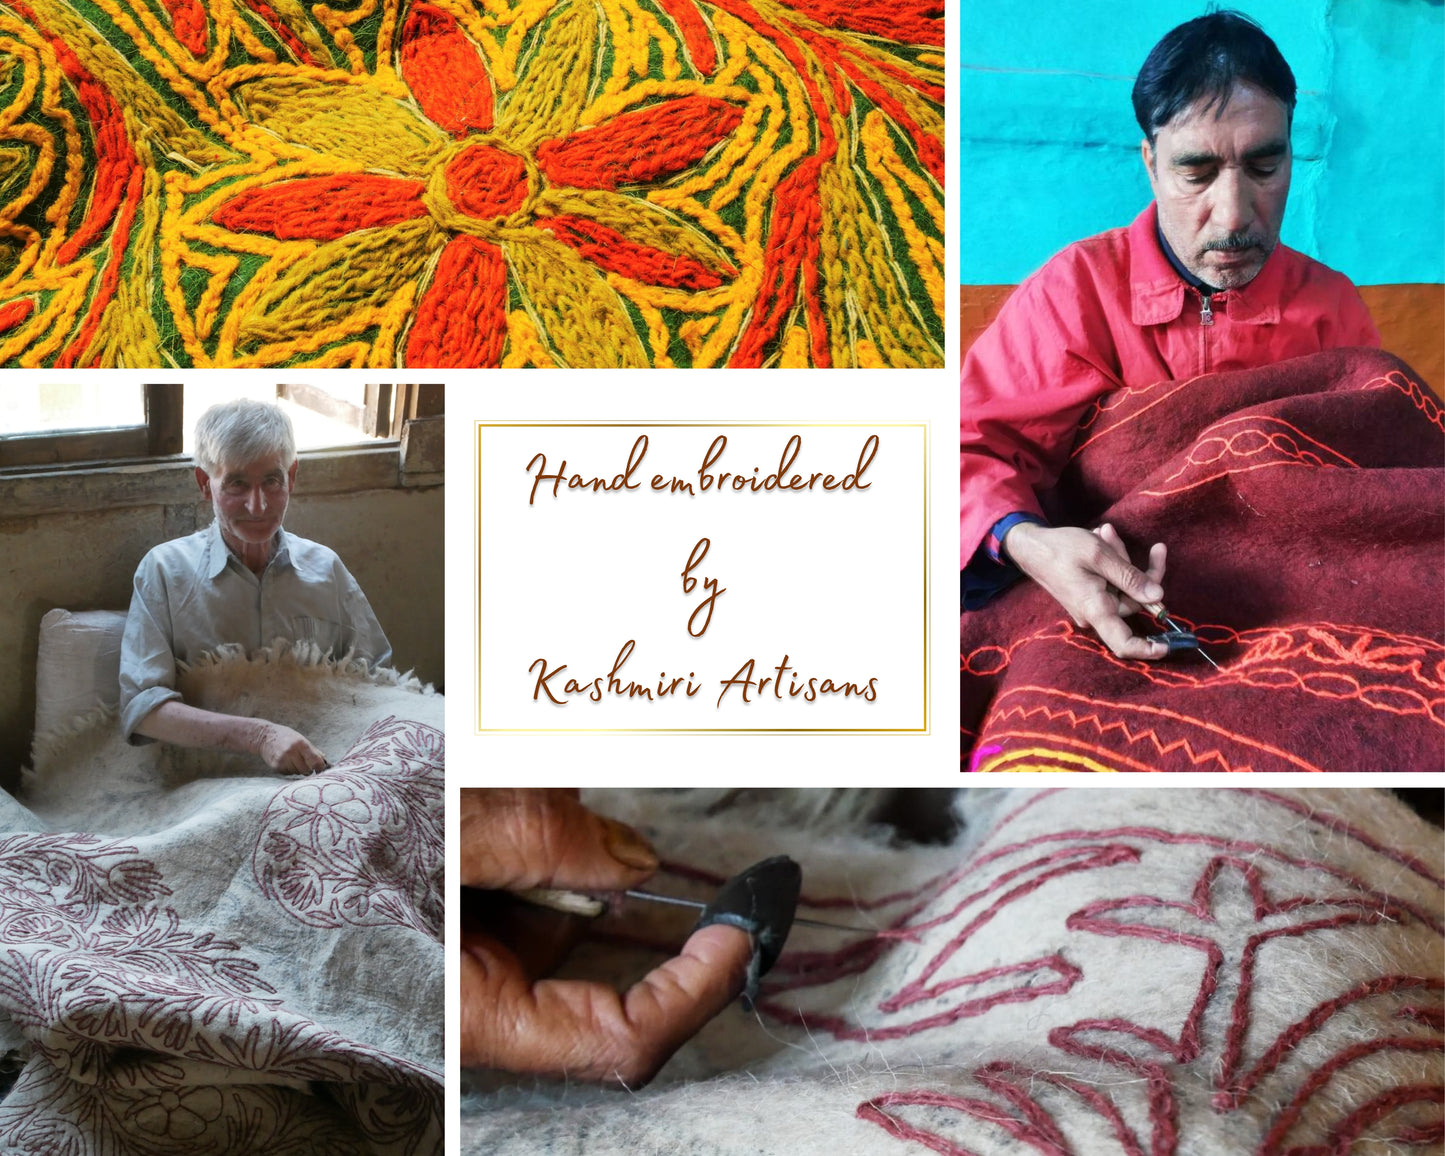 Kashmiri Namda wool rug boho area rug | colorful traditional hand felted Carpet 7x5 ft Floral embroidery